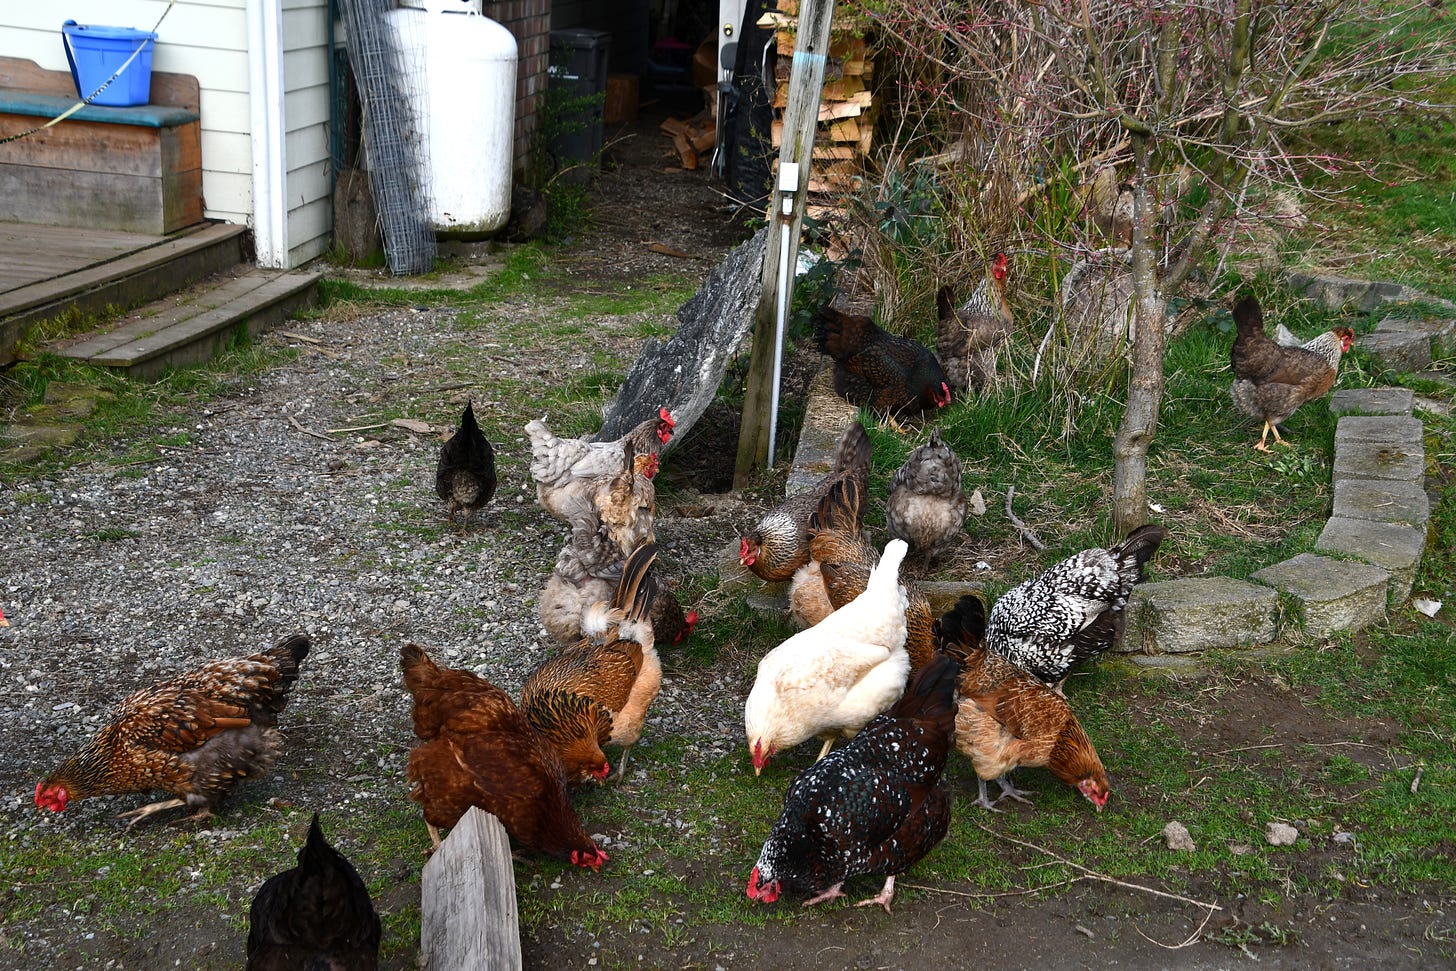 Chickens roaming in yard